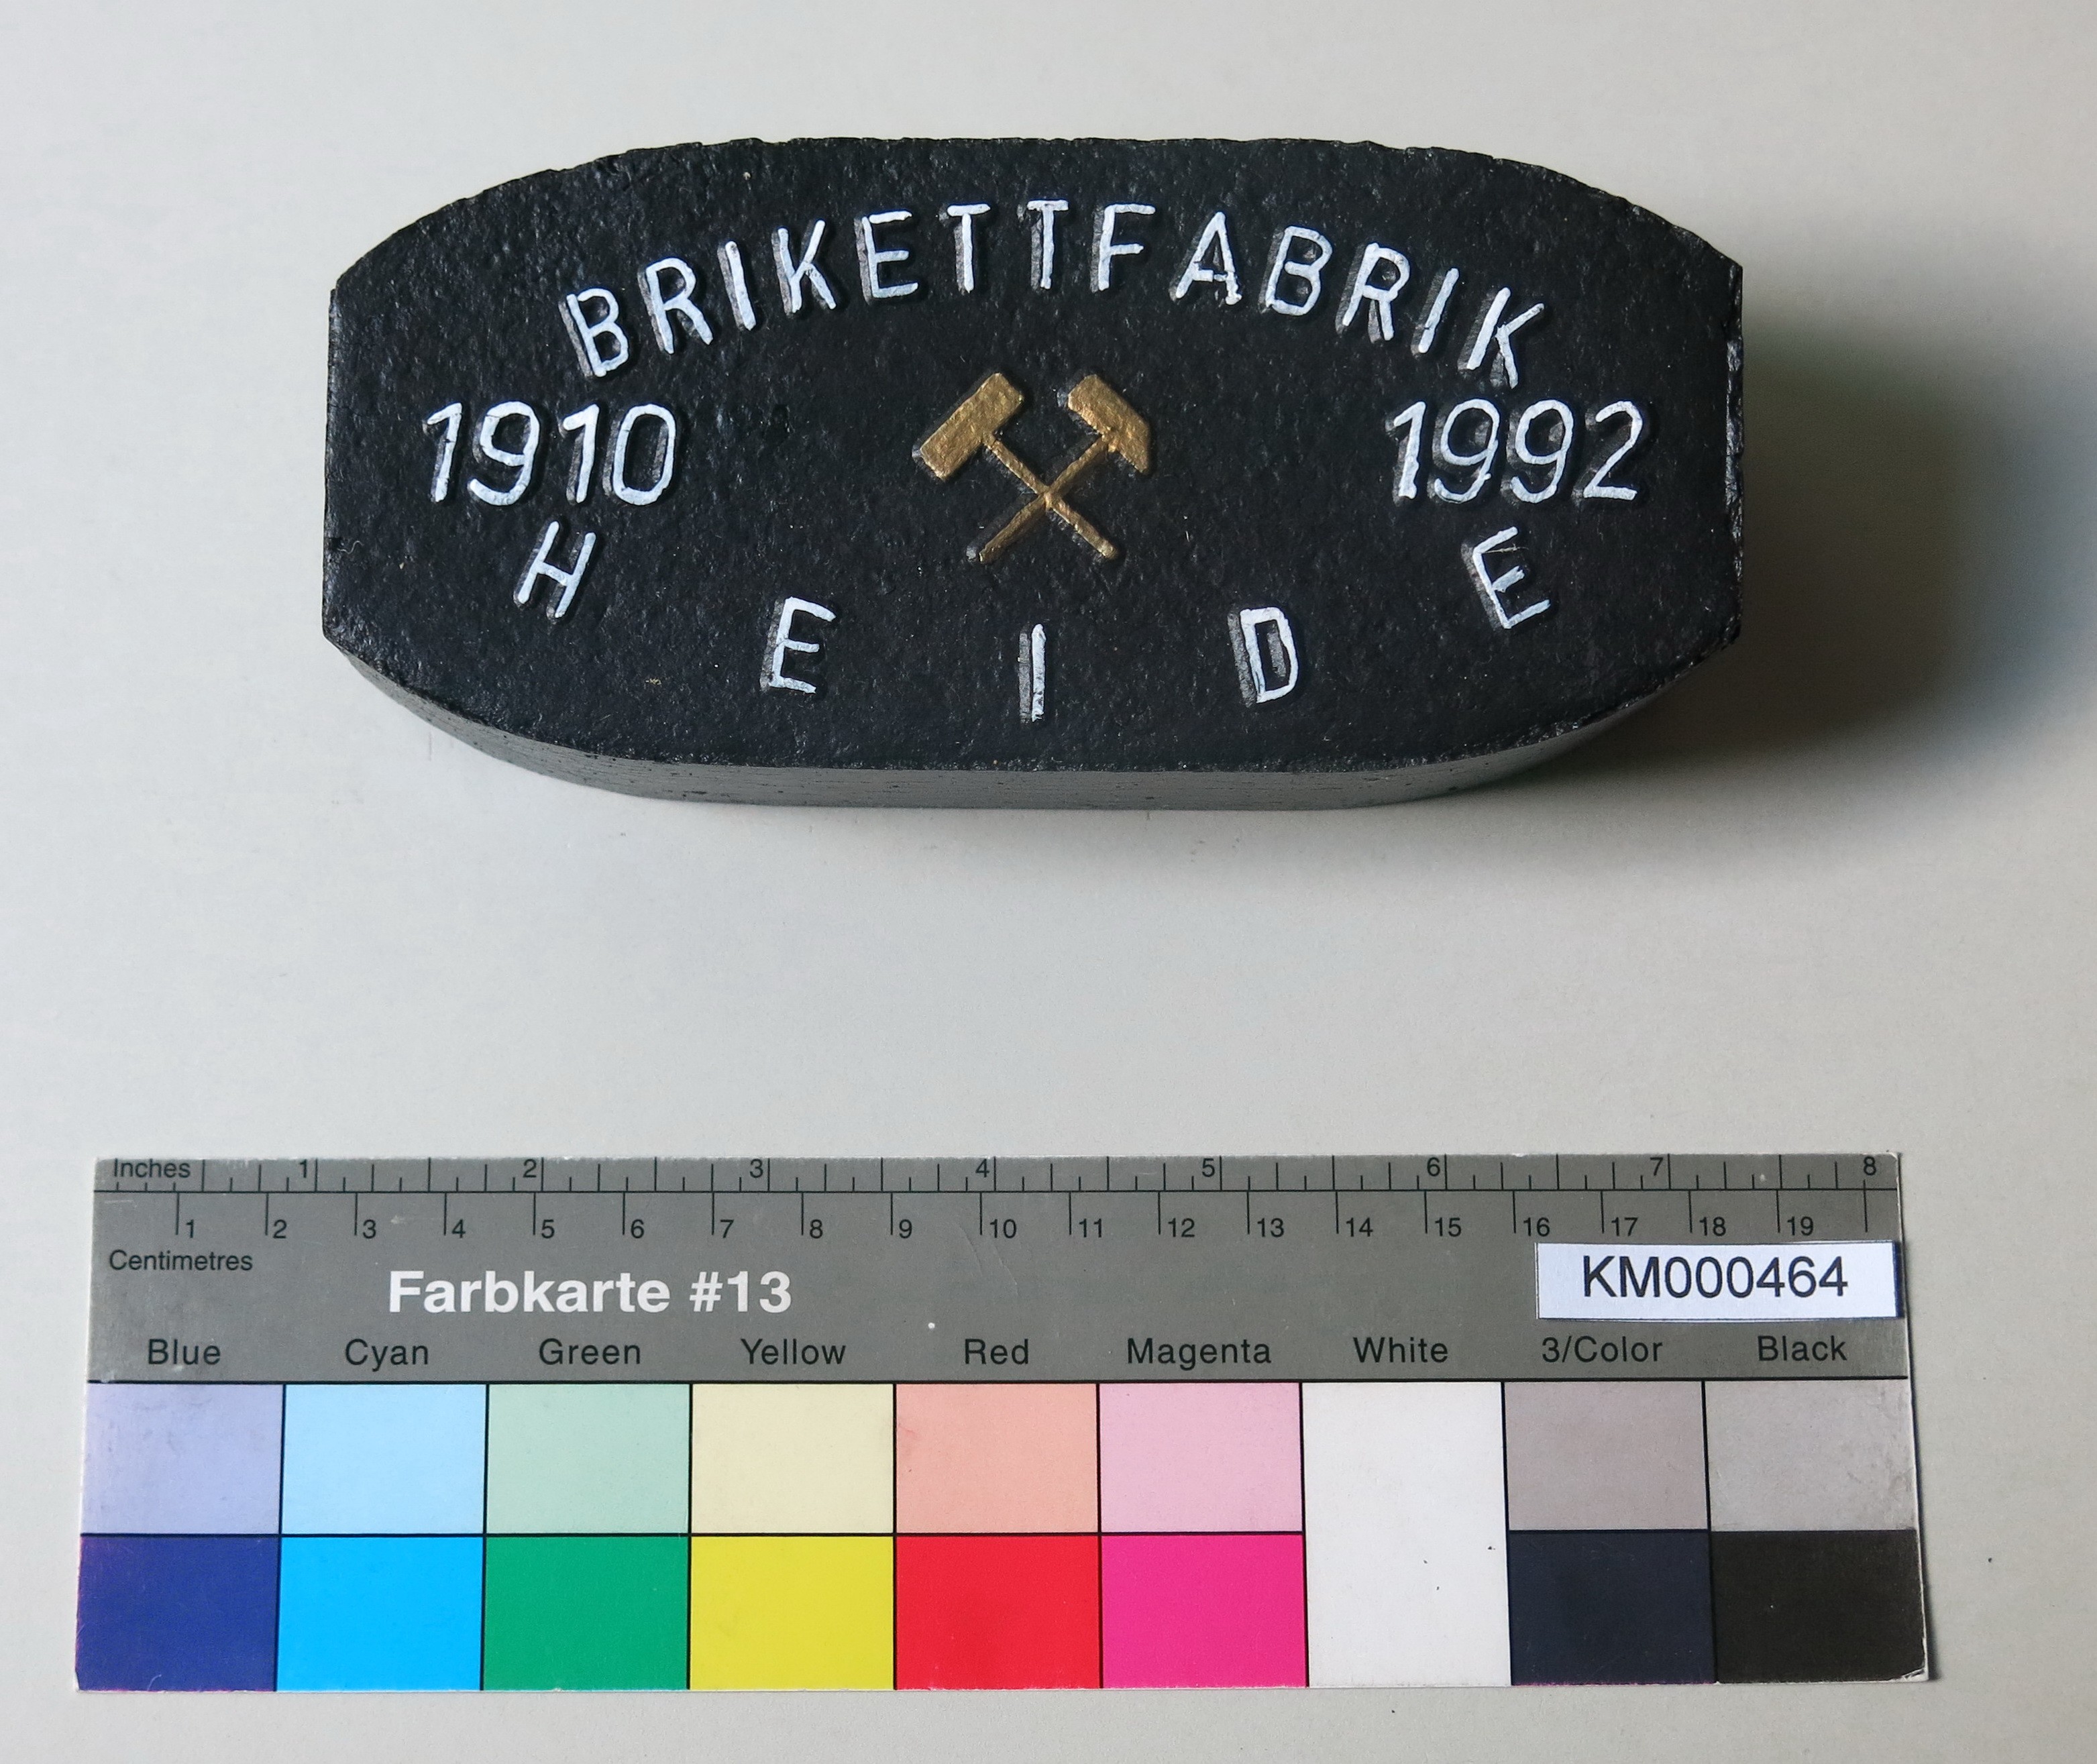 Zierbrikett "BRIKETTFABRIK 1910 1992 HEIDE" (Energiefabrik Knappenrode CC BY-SA)